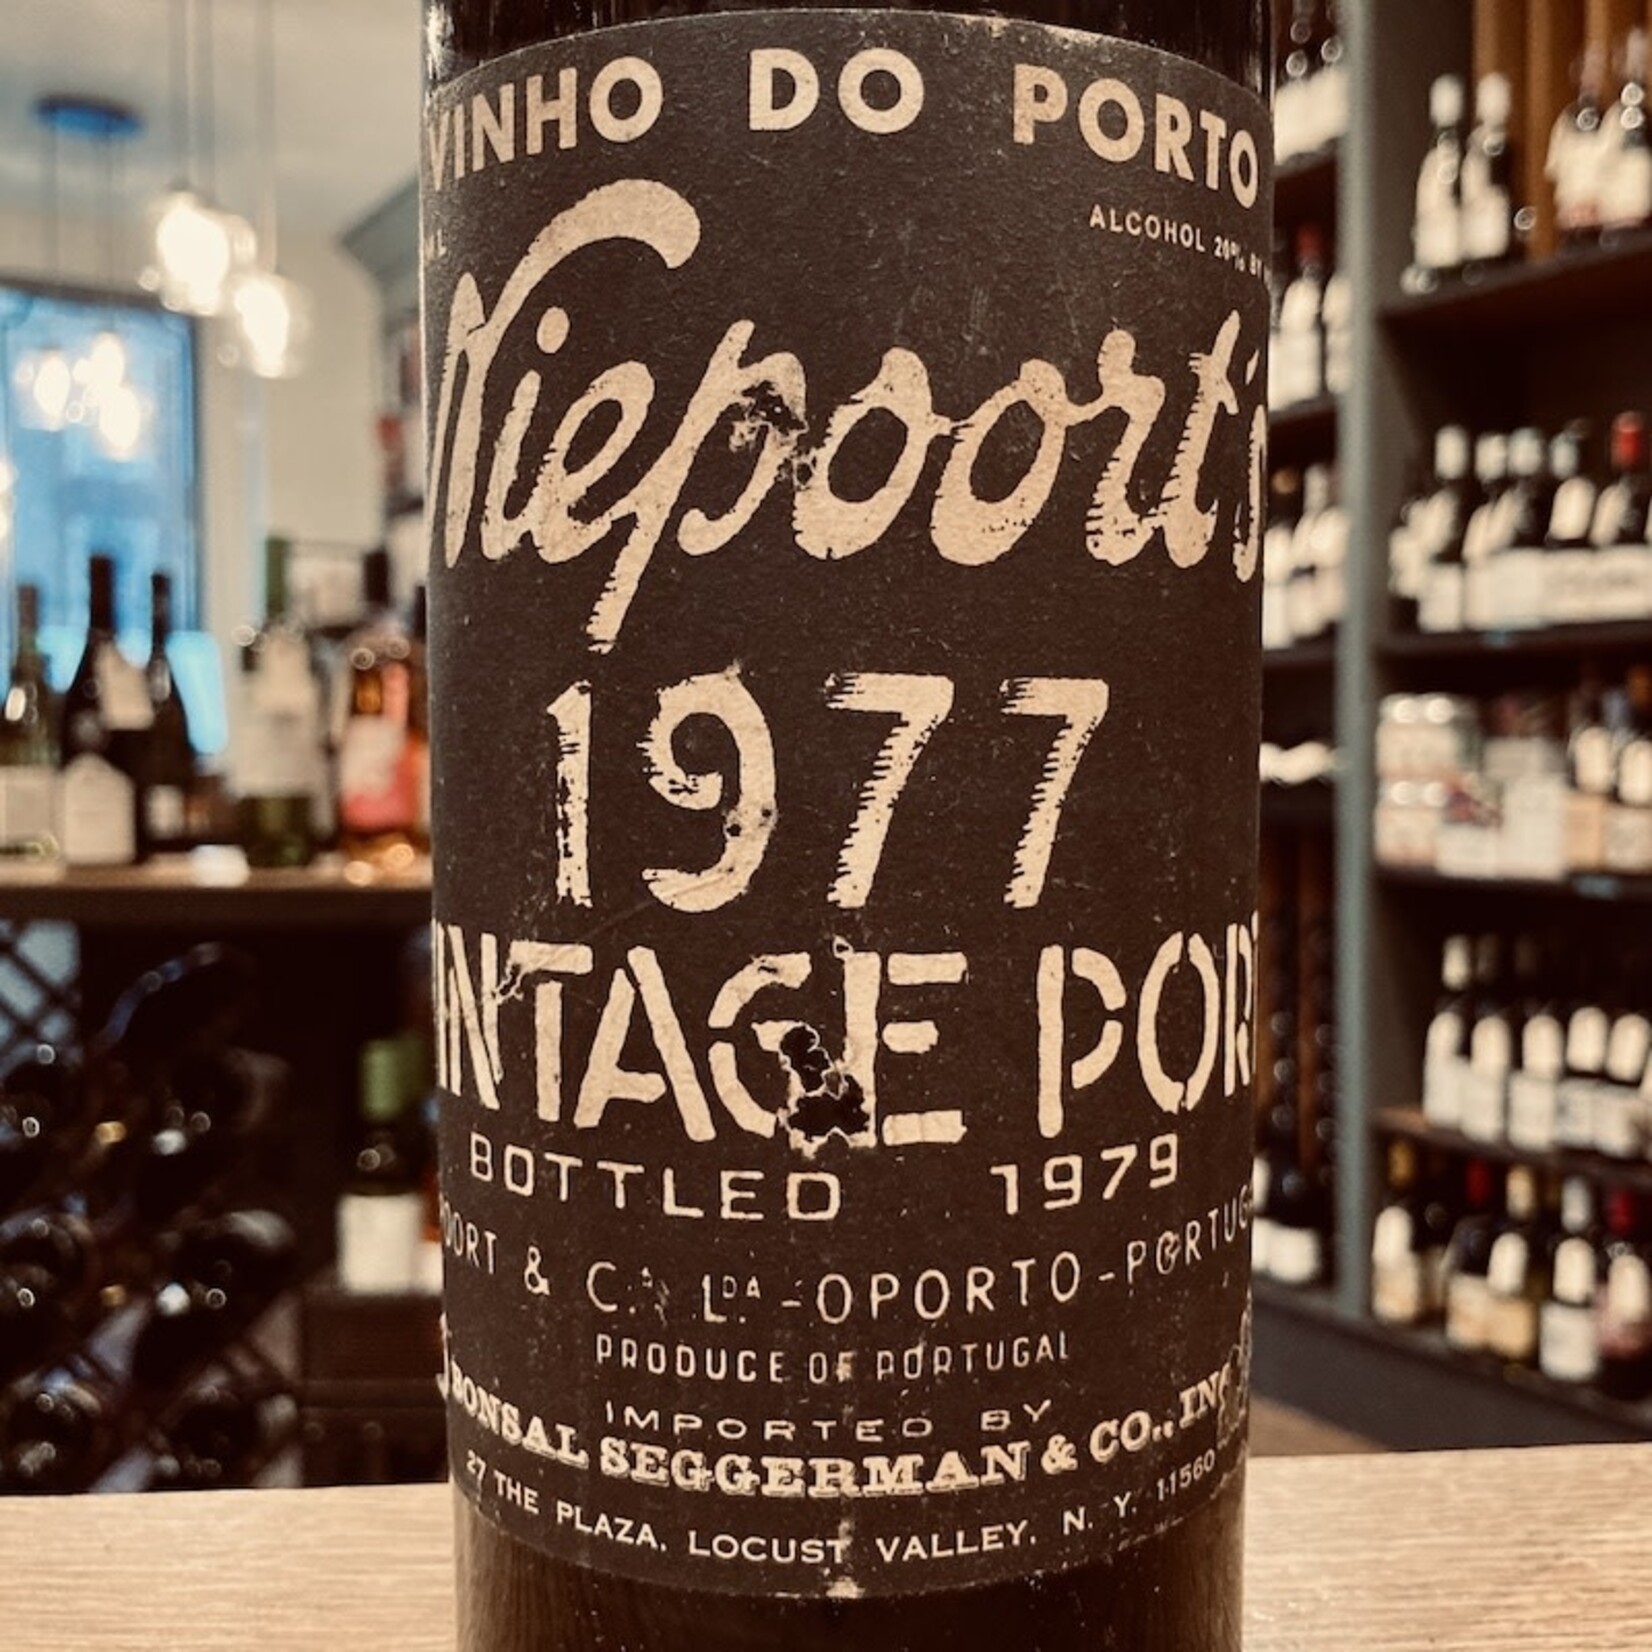 Portugal 1977 Niepoort's Vintage Port